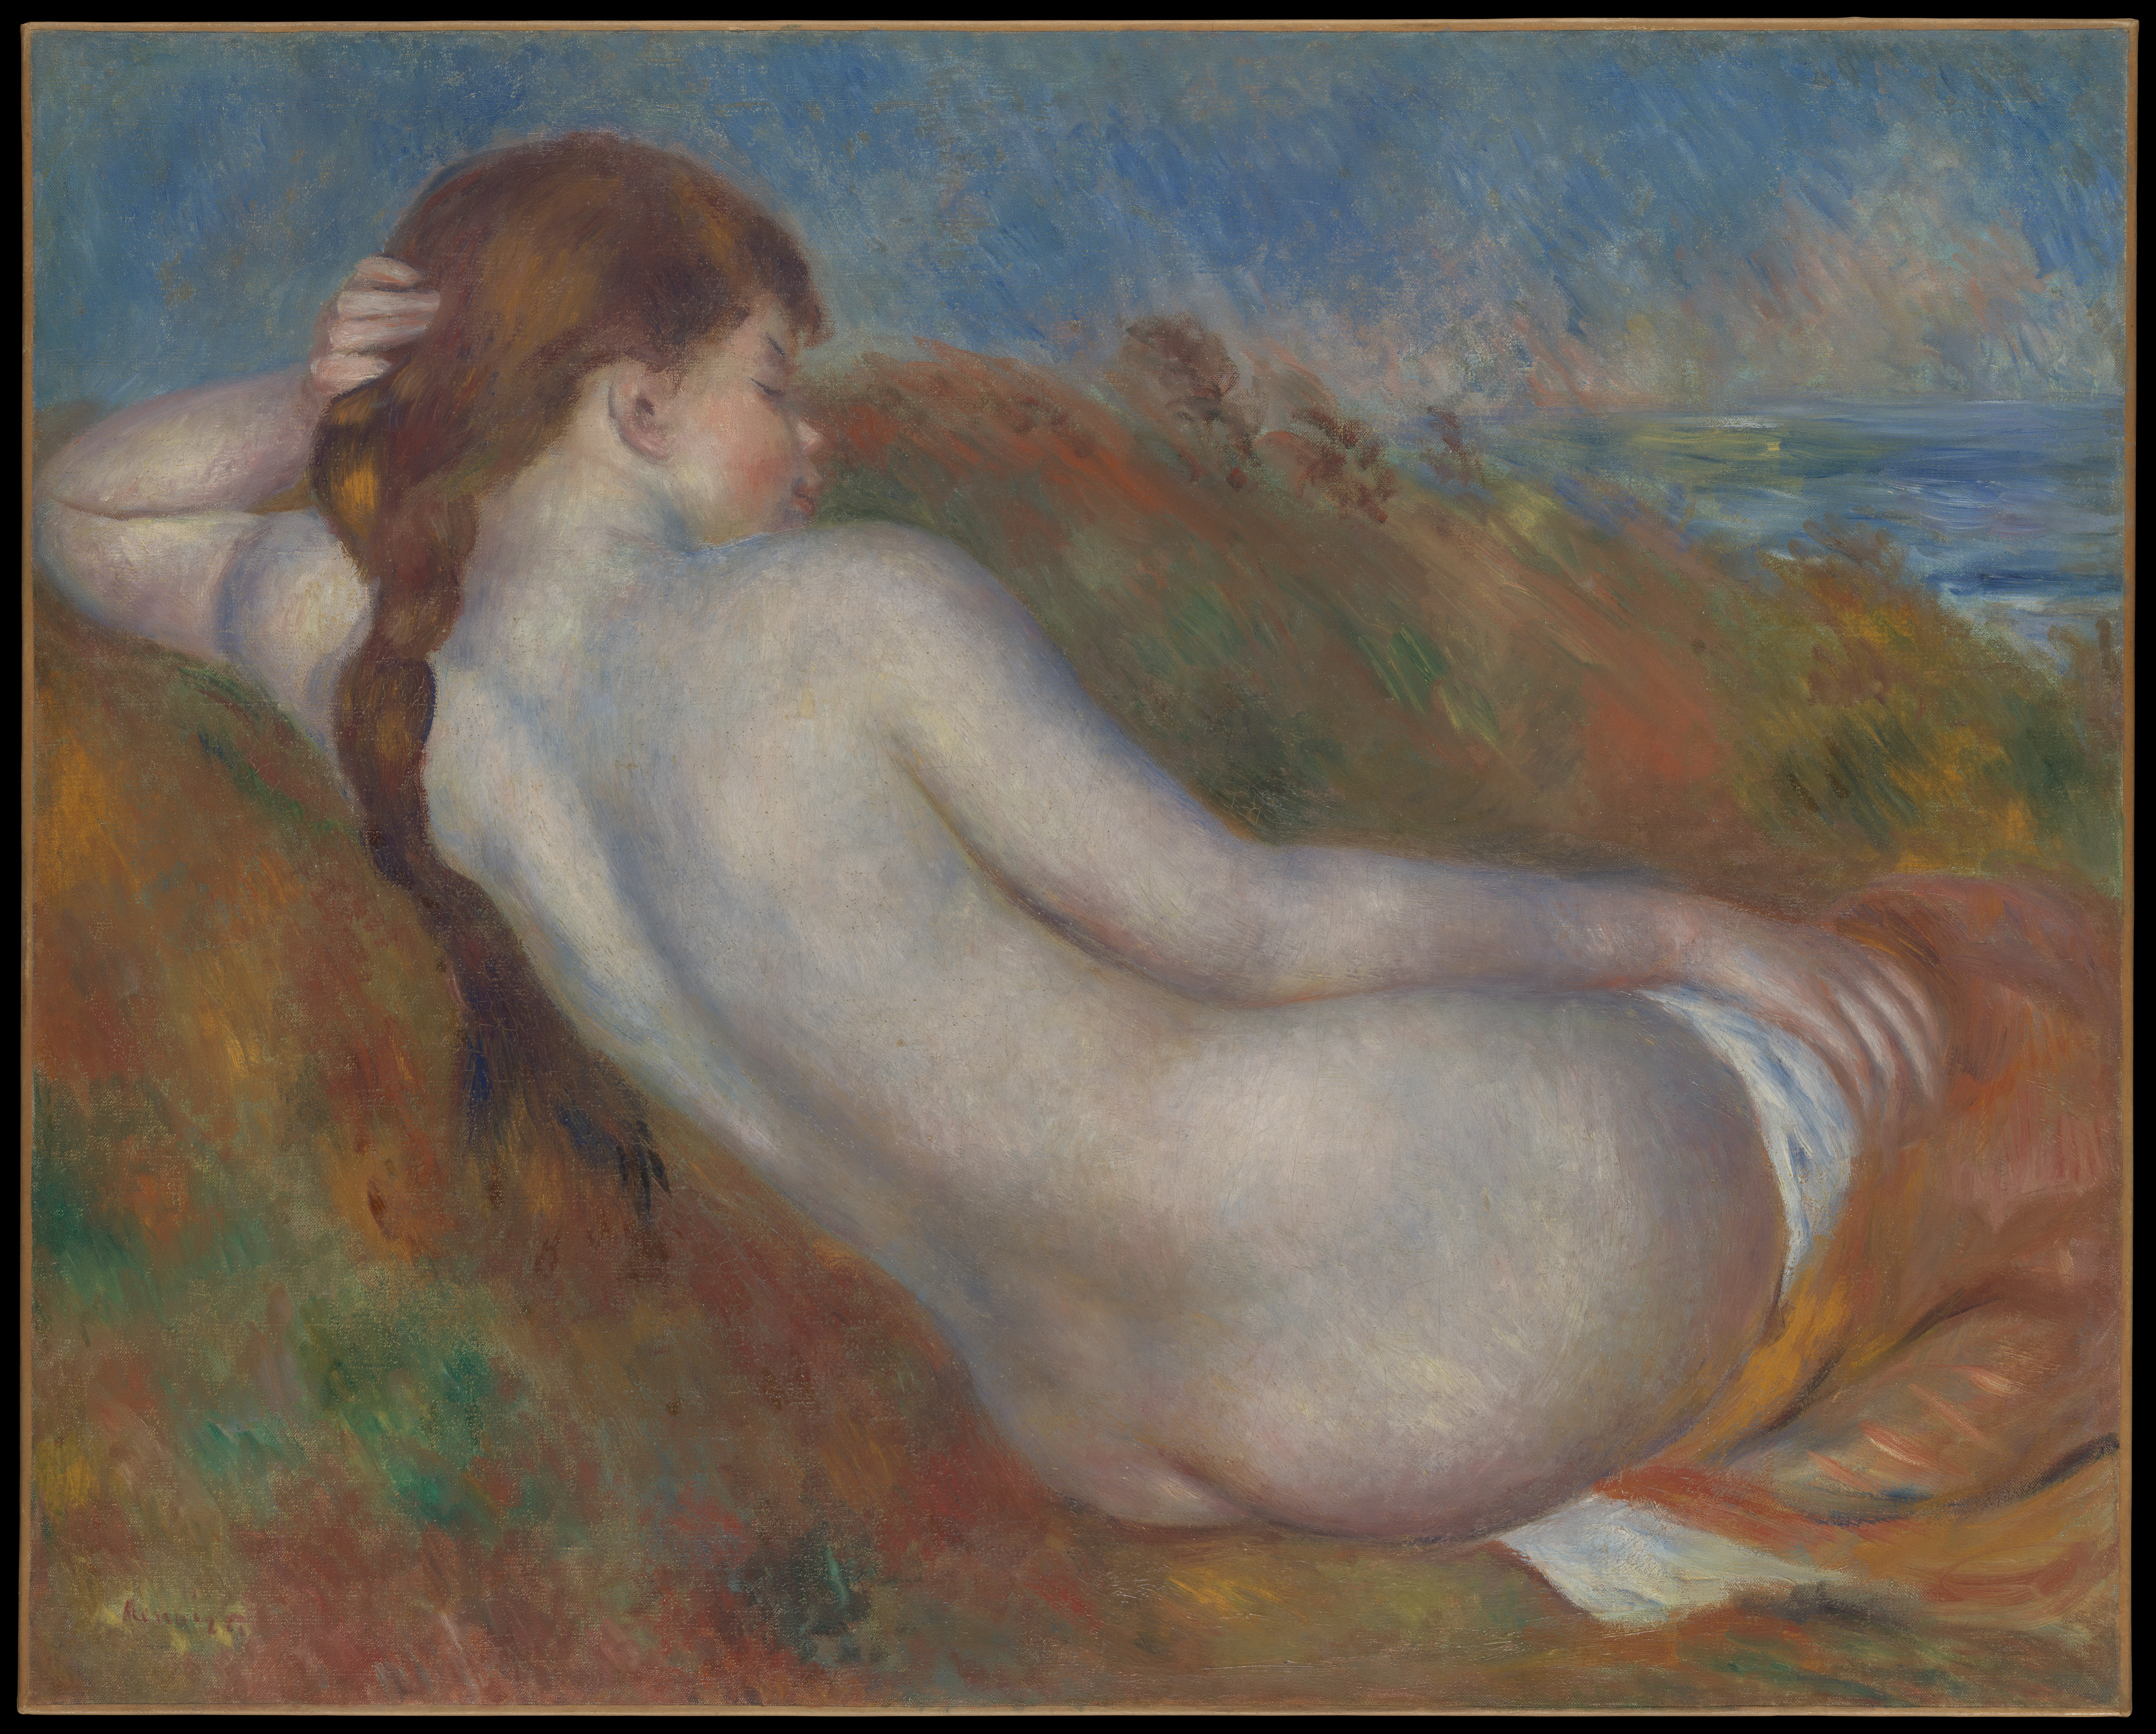 Lehnender Akt by Pierre-Auguste Renoir - 1883 - 65,1 x 81,3 cm Metropolitan Museum of Art